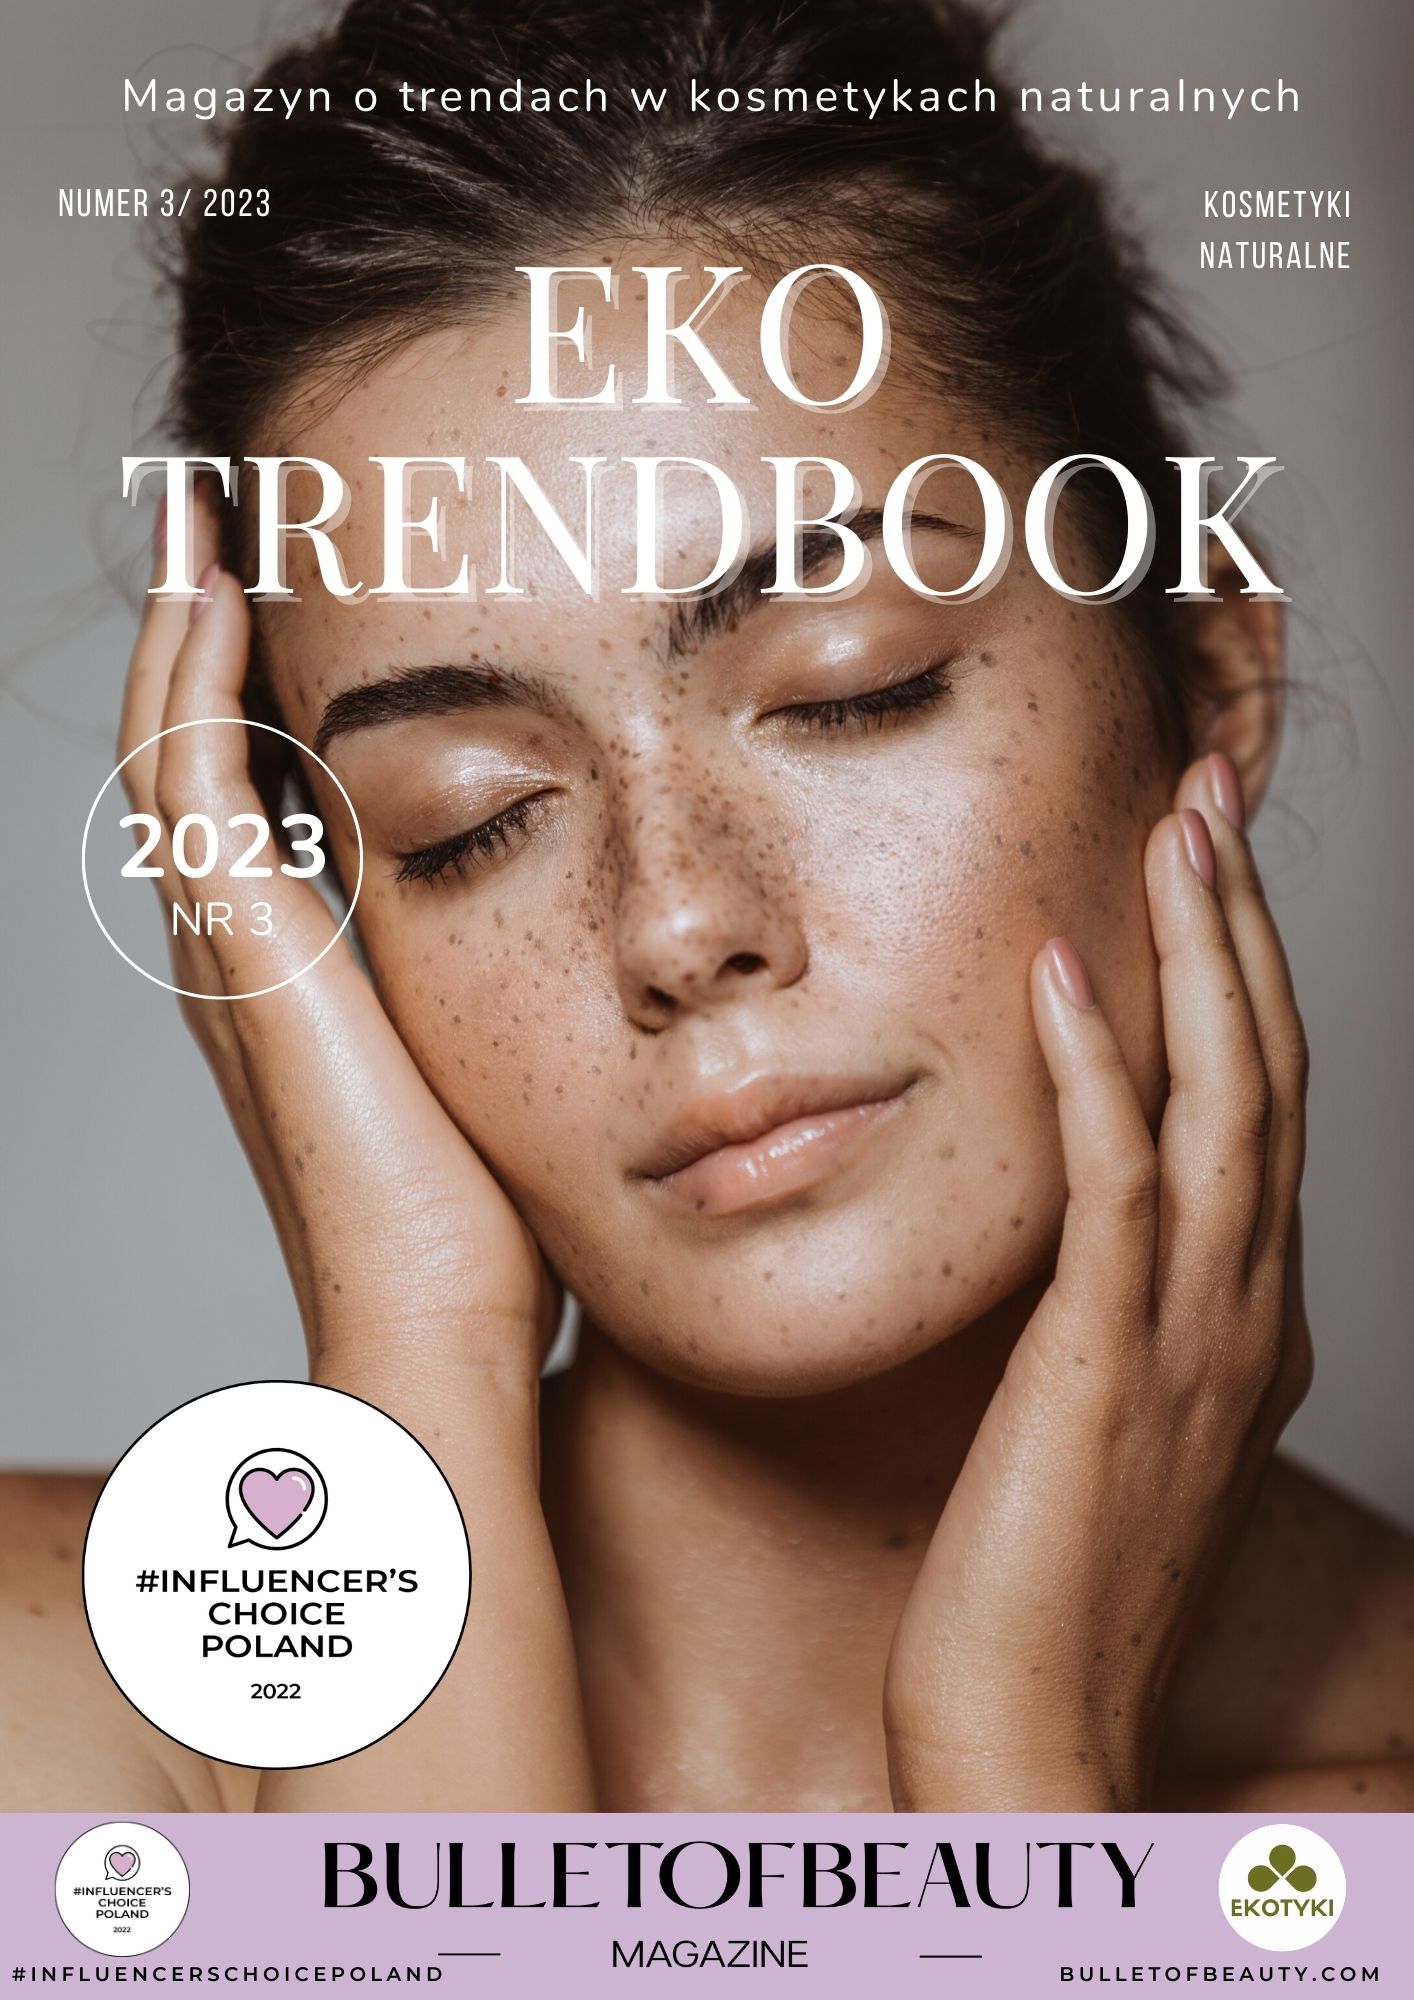 Eko Trendbook 2023